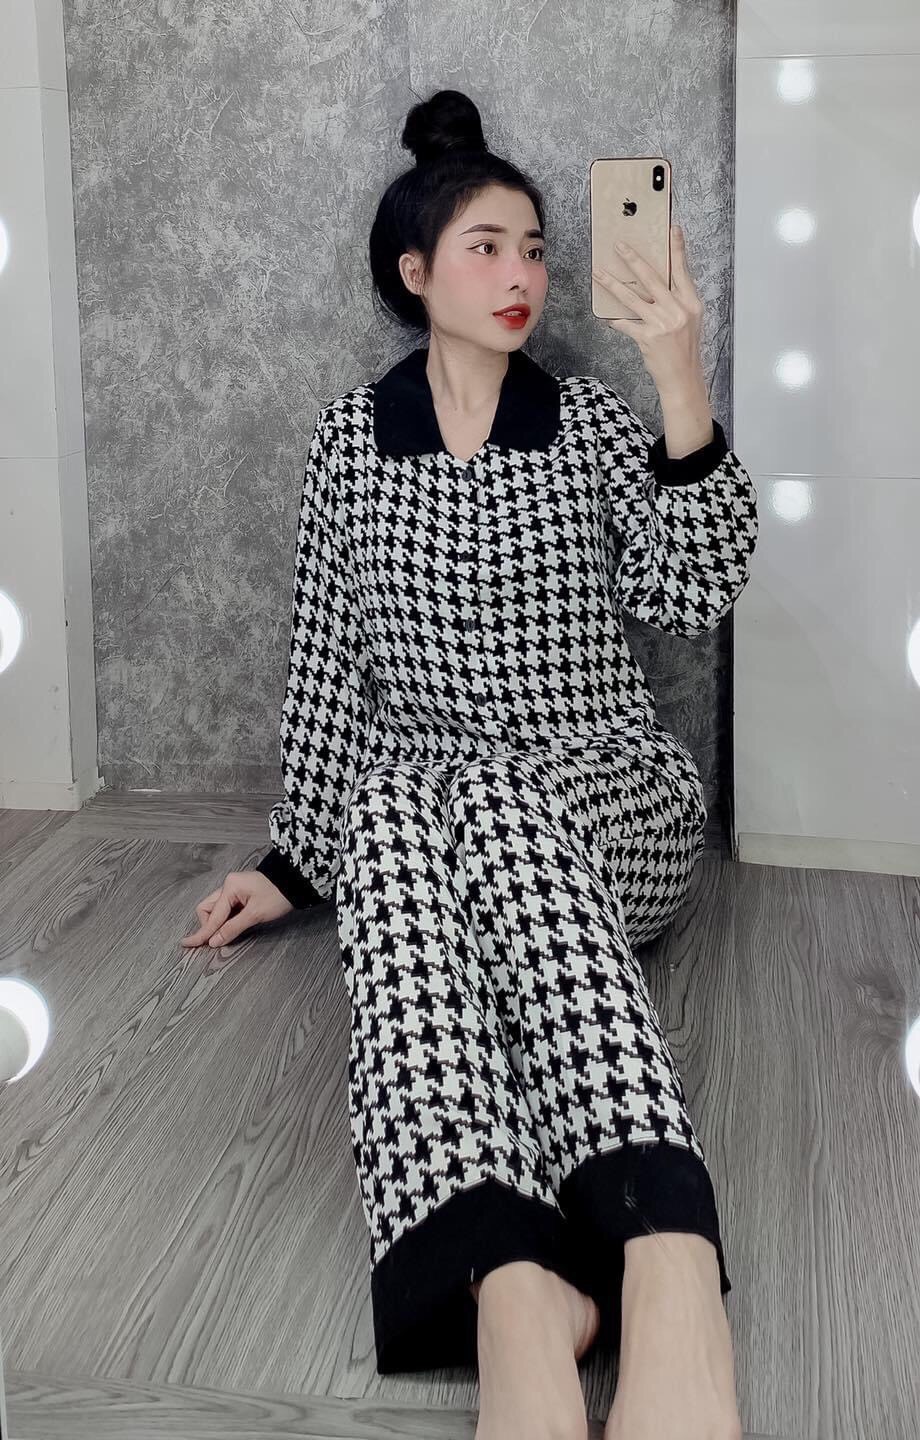 Pijama lụa Satin họa tiết đen trắng cực xinh